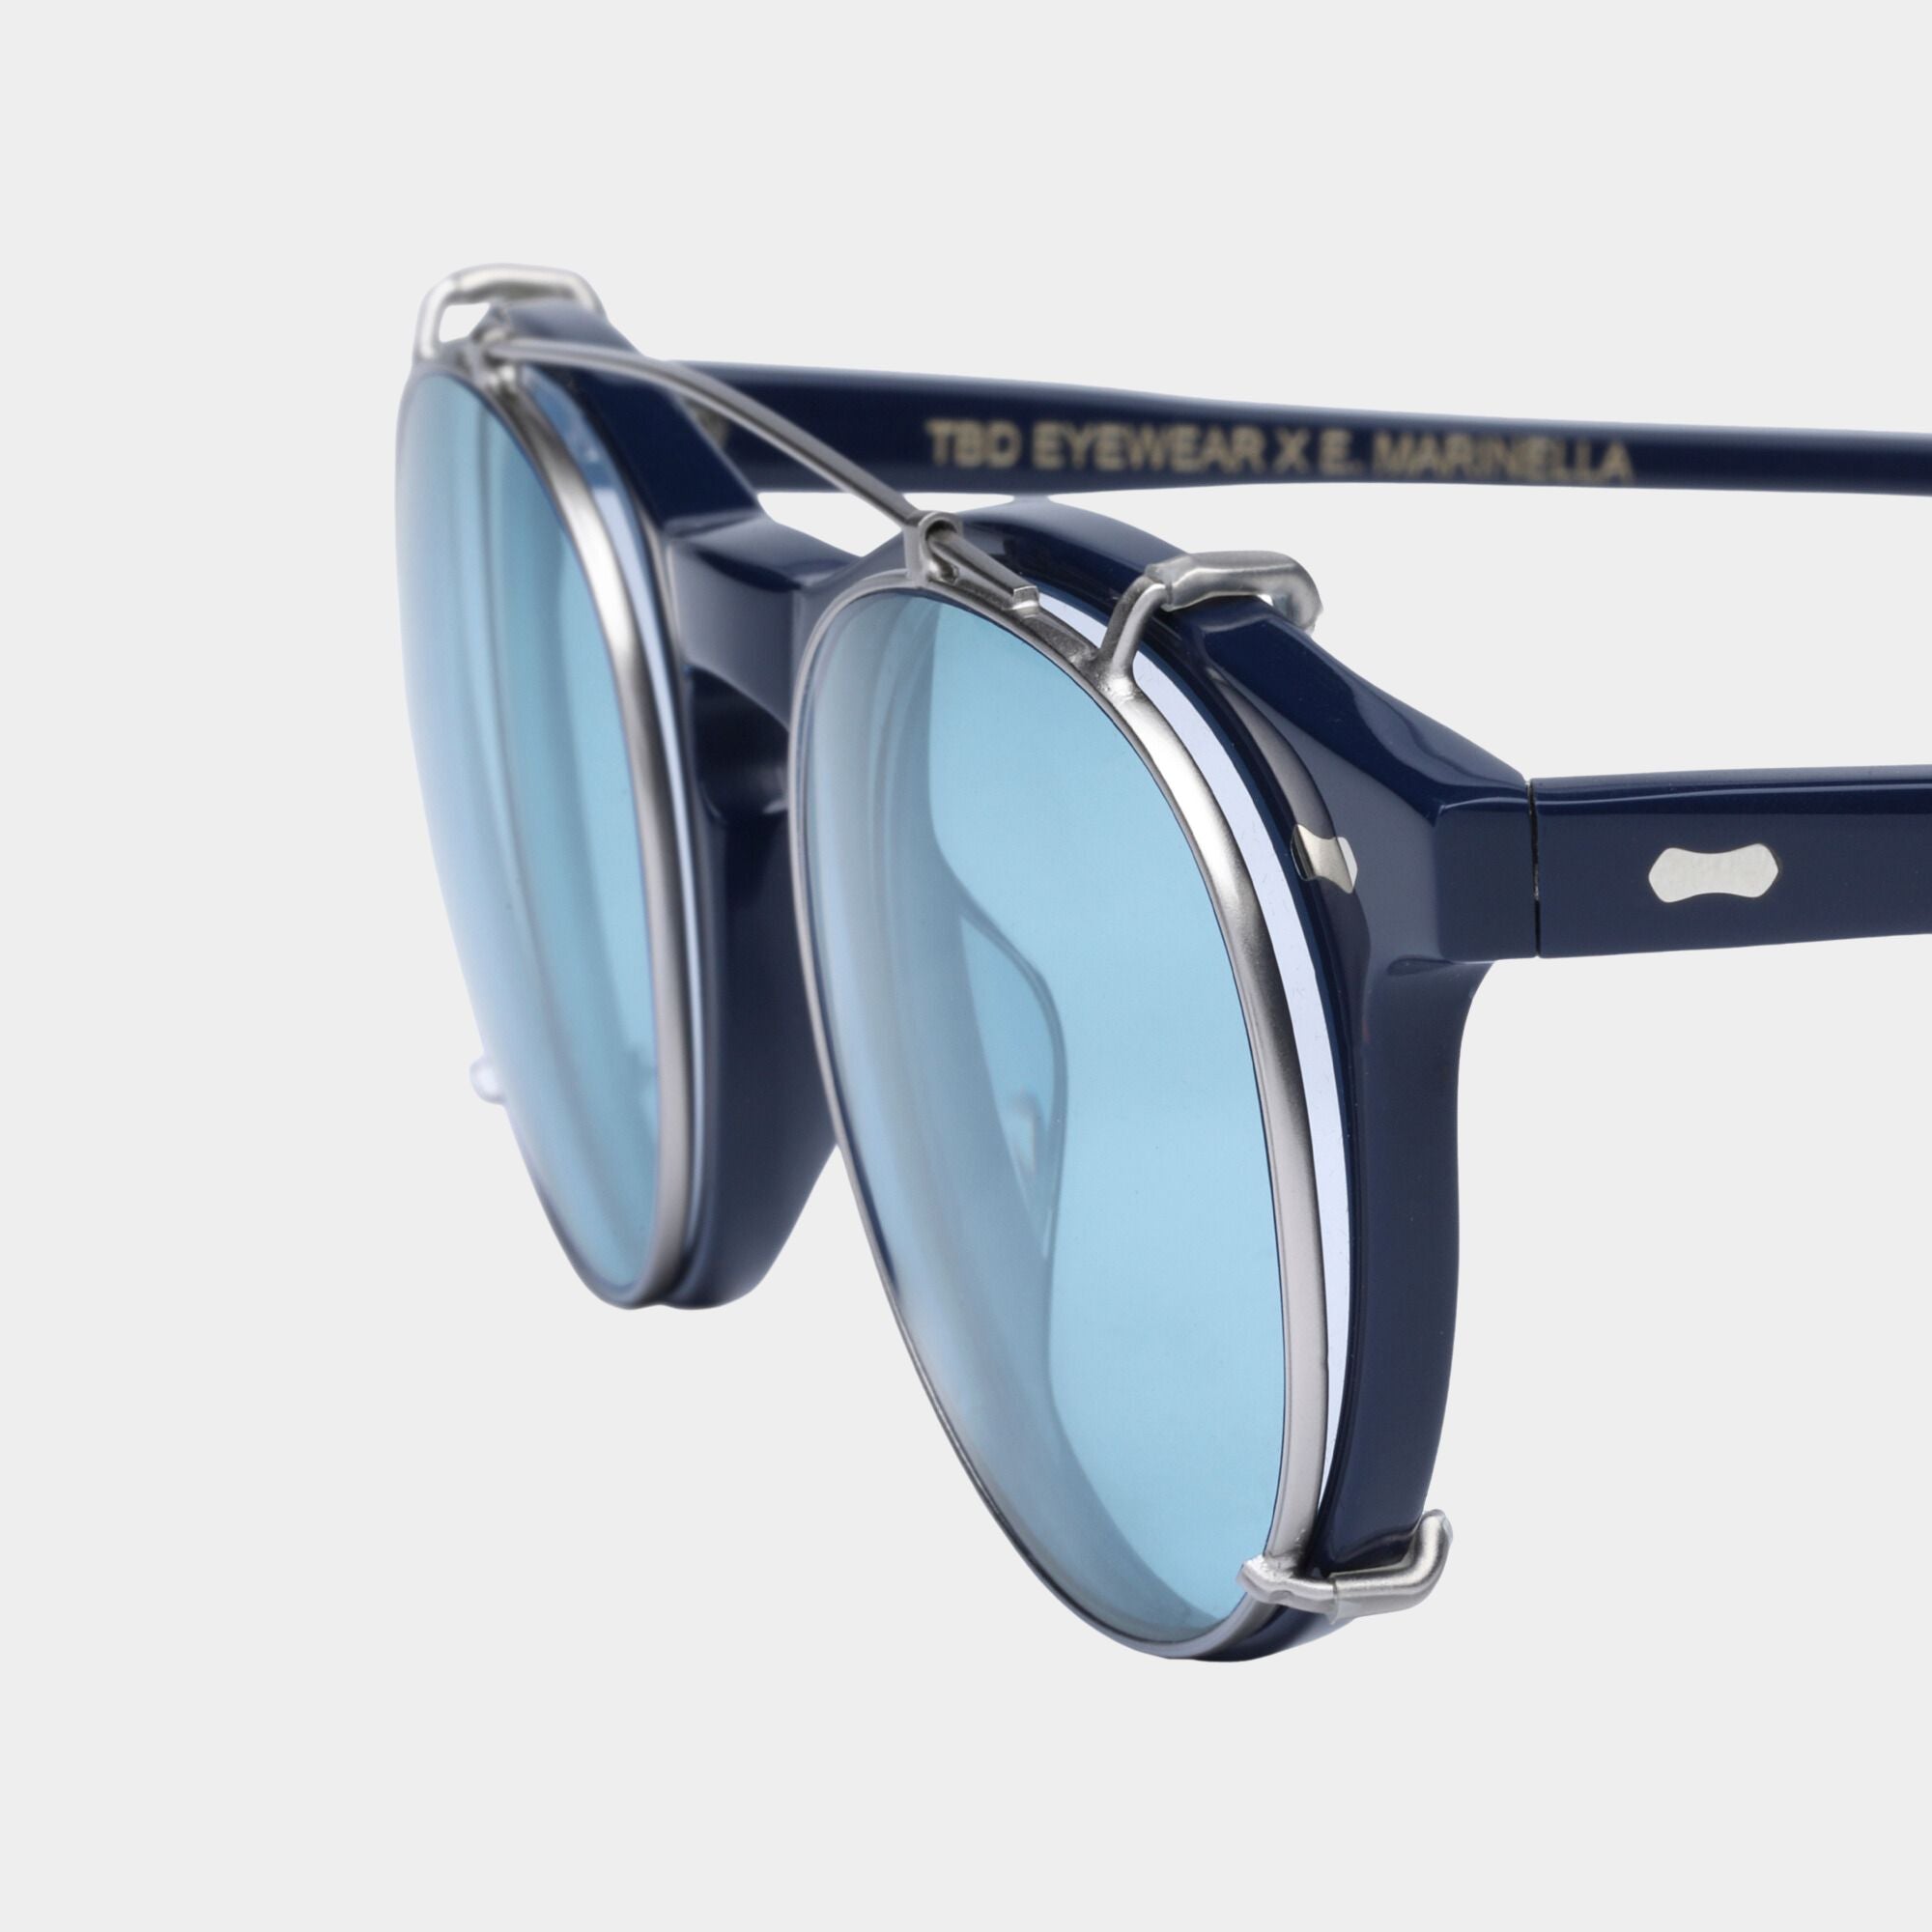 sunglasses-pleat-limited-edition-marinella-tbd-eyewear-lateral